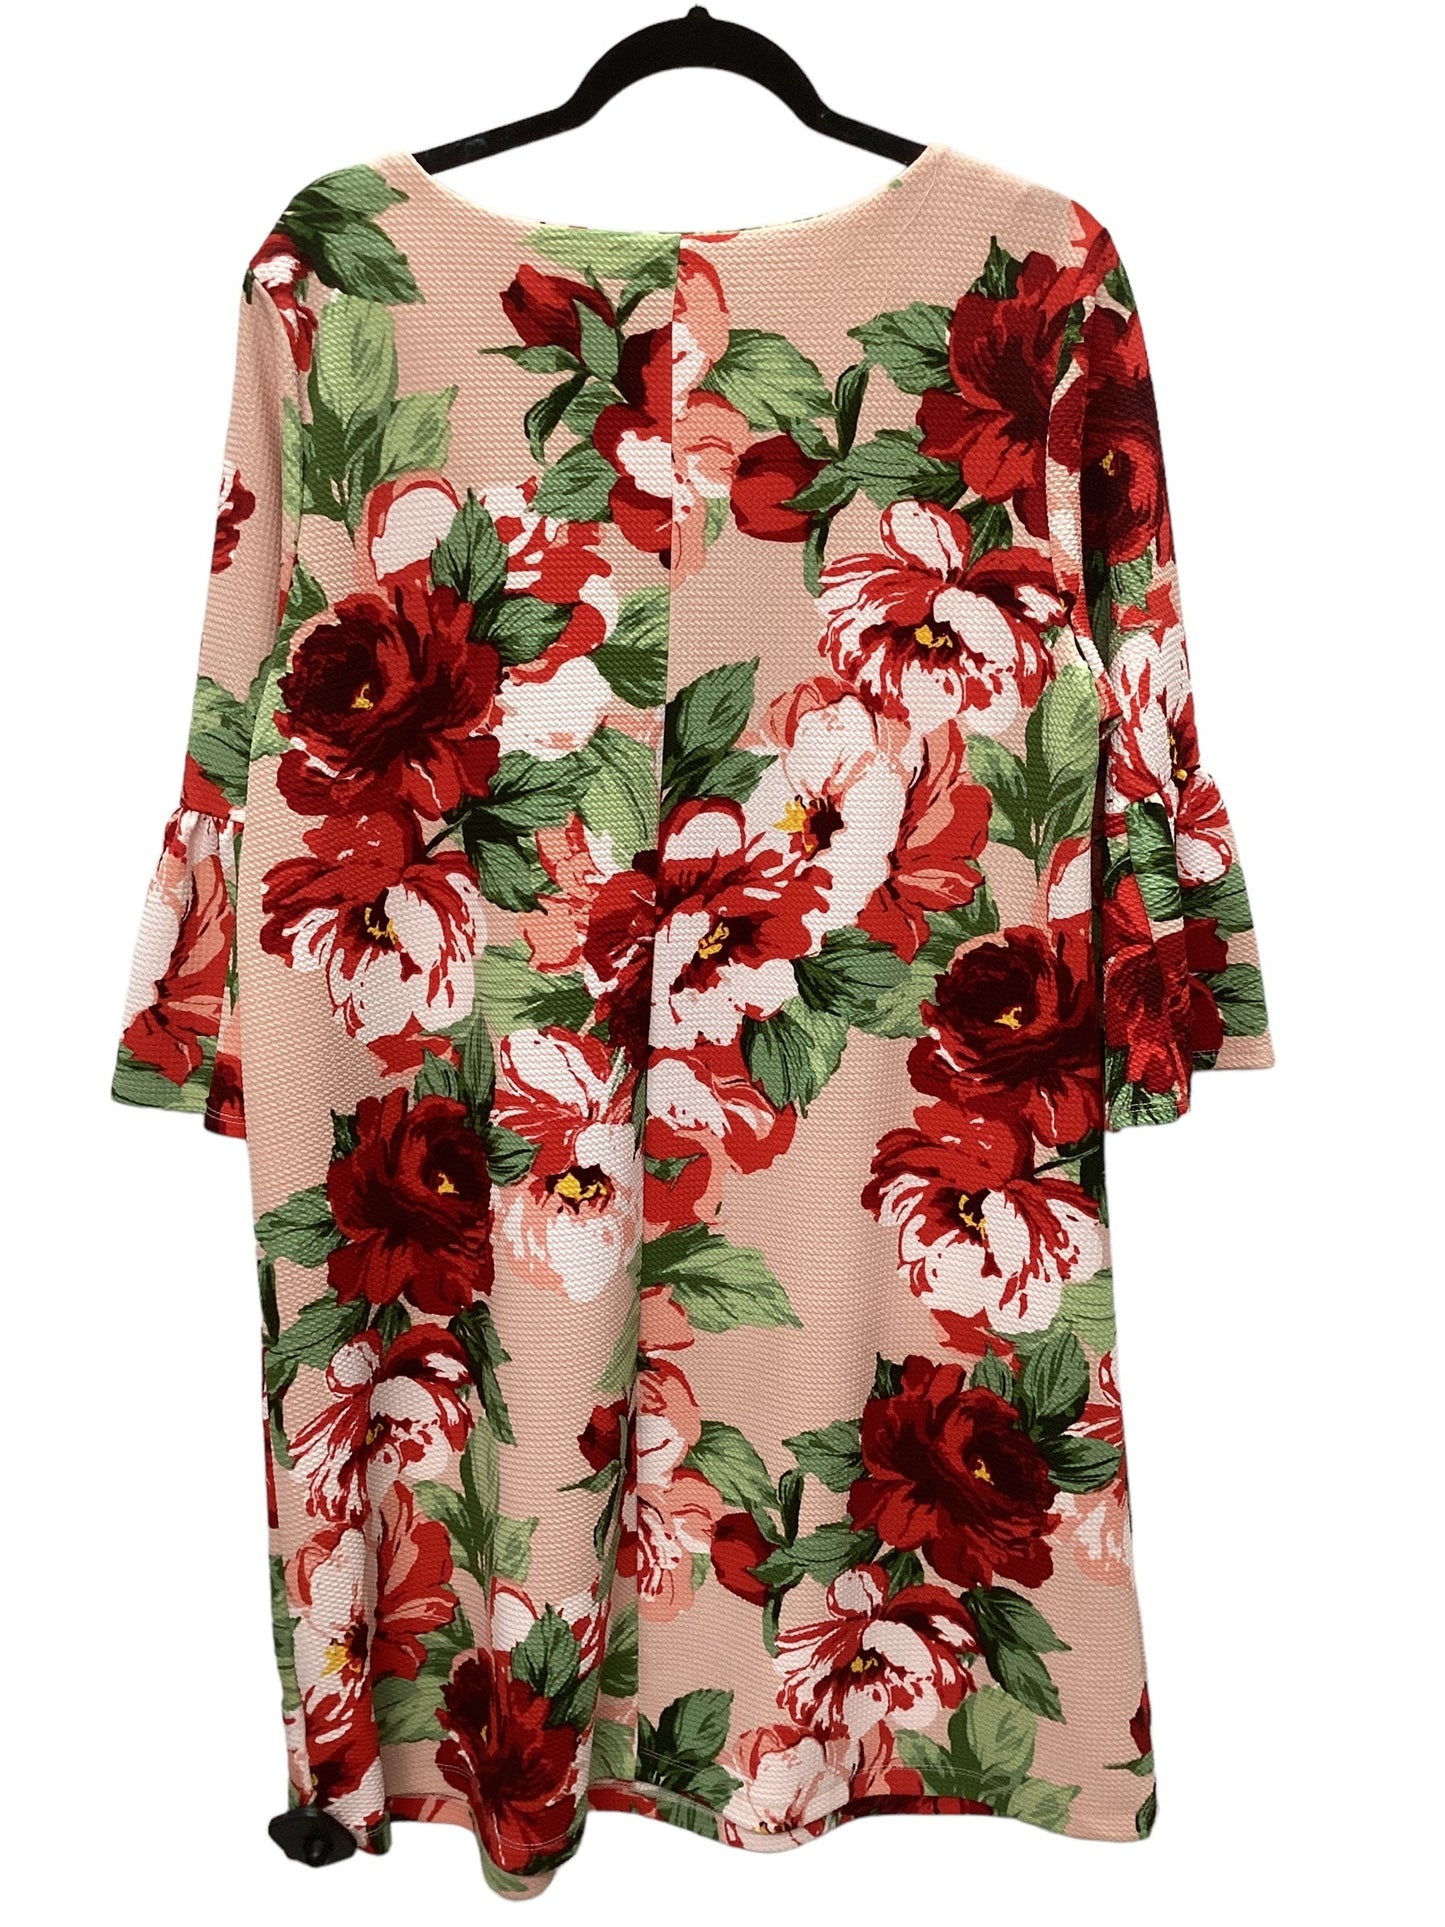 Floral Print Dress Casual Short Bobeau, Size 1x